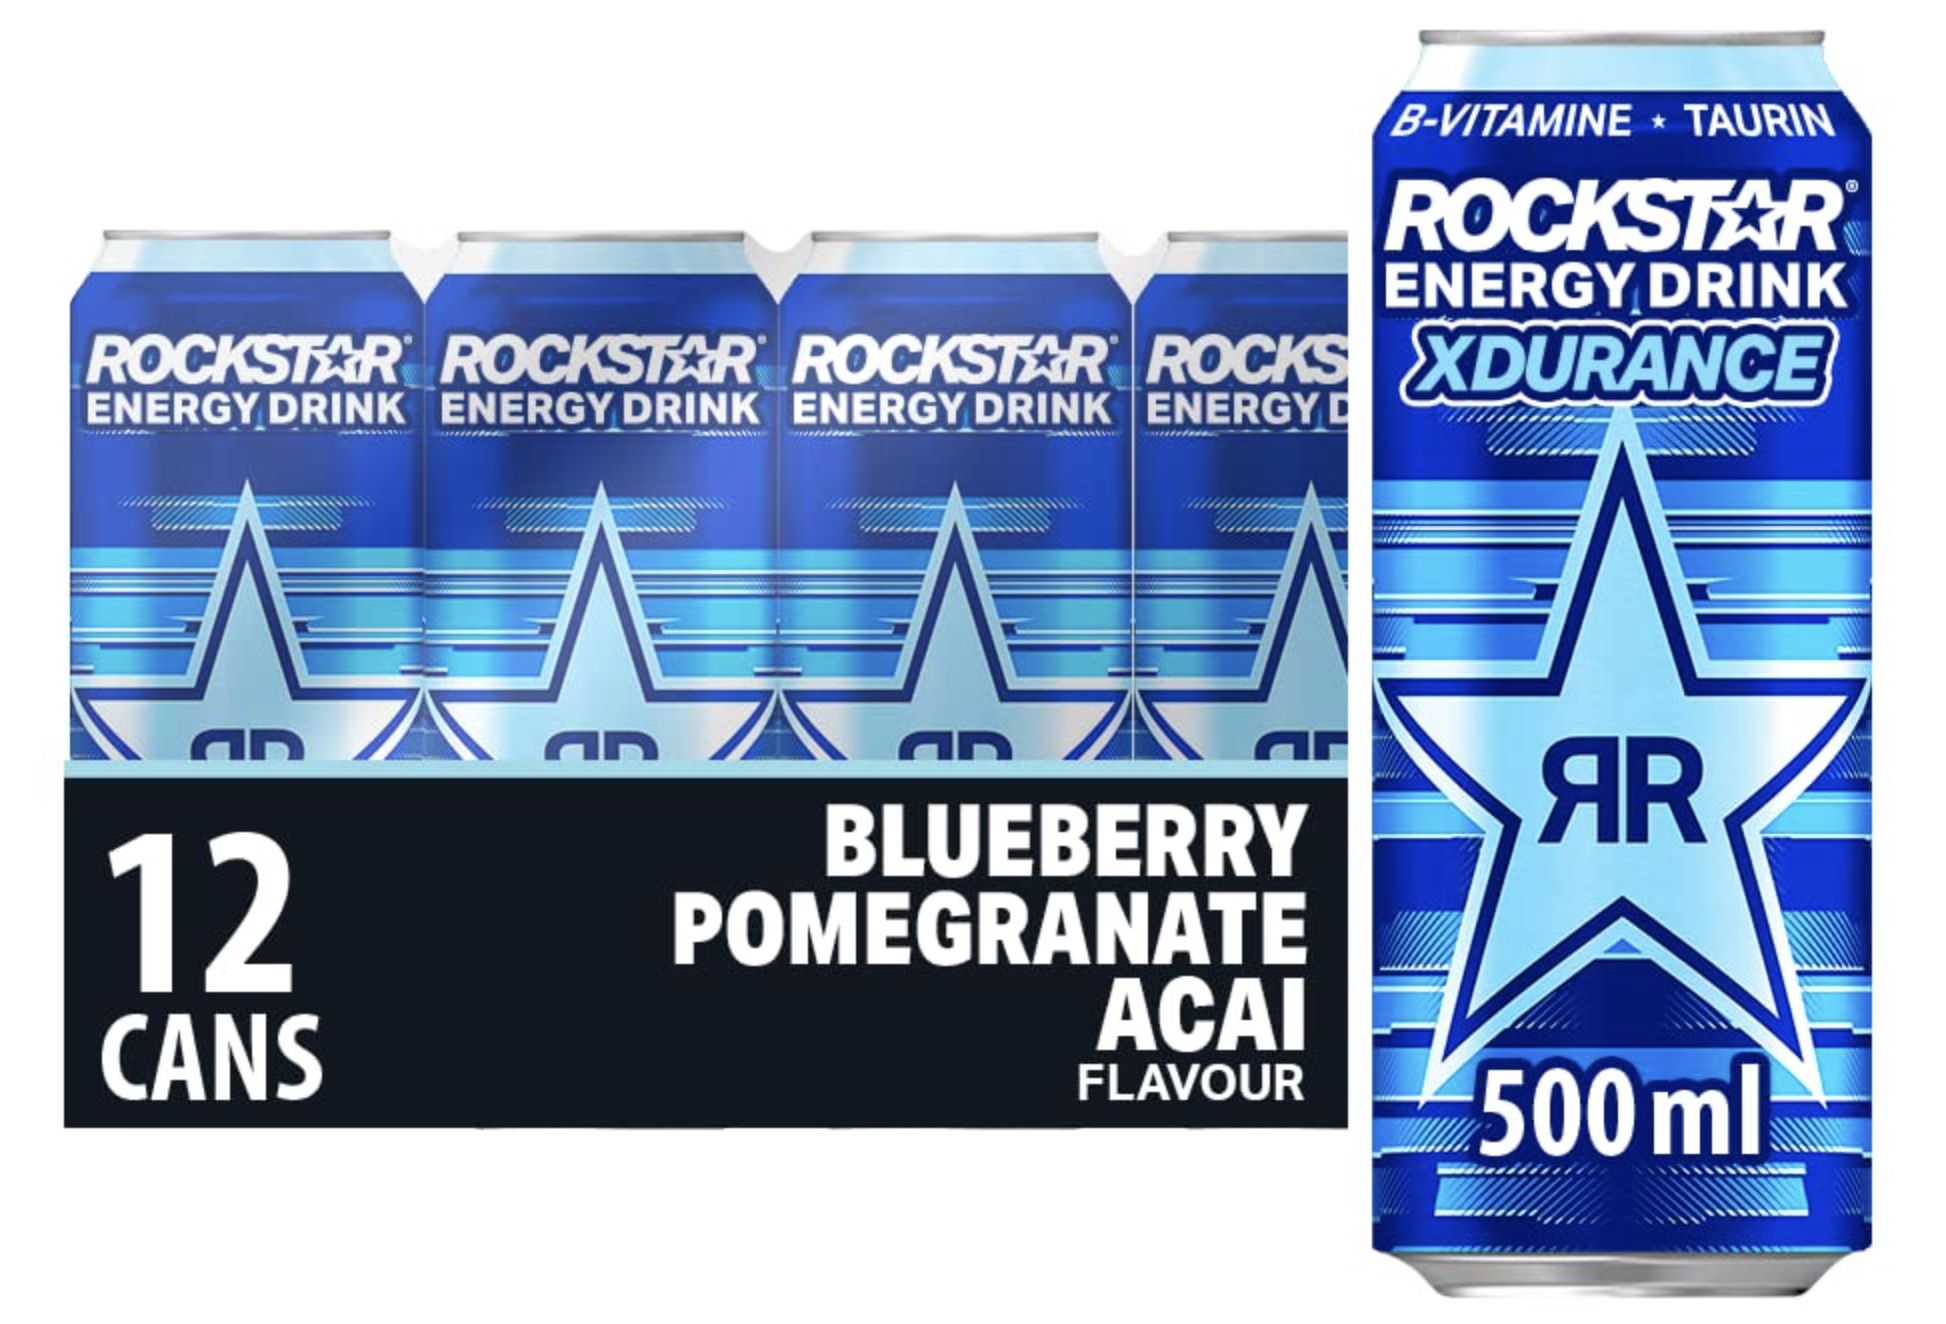 12x 500ml Rockstar Energy Drink Xdurance Blueberry Pomegranate Acai für 7,80€ + Pfand